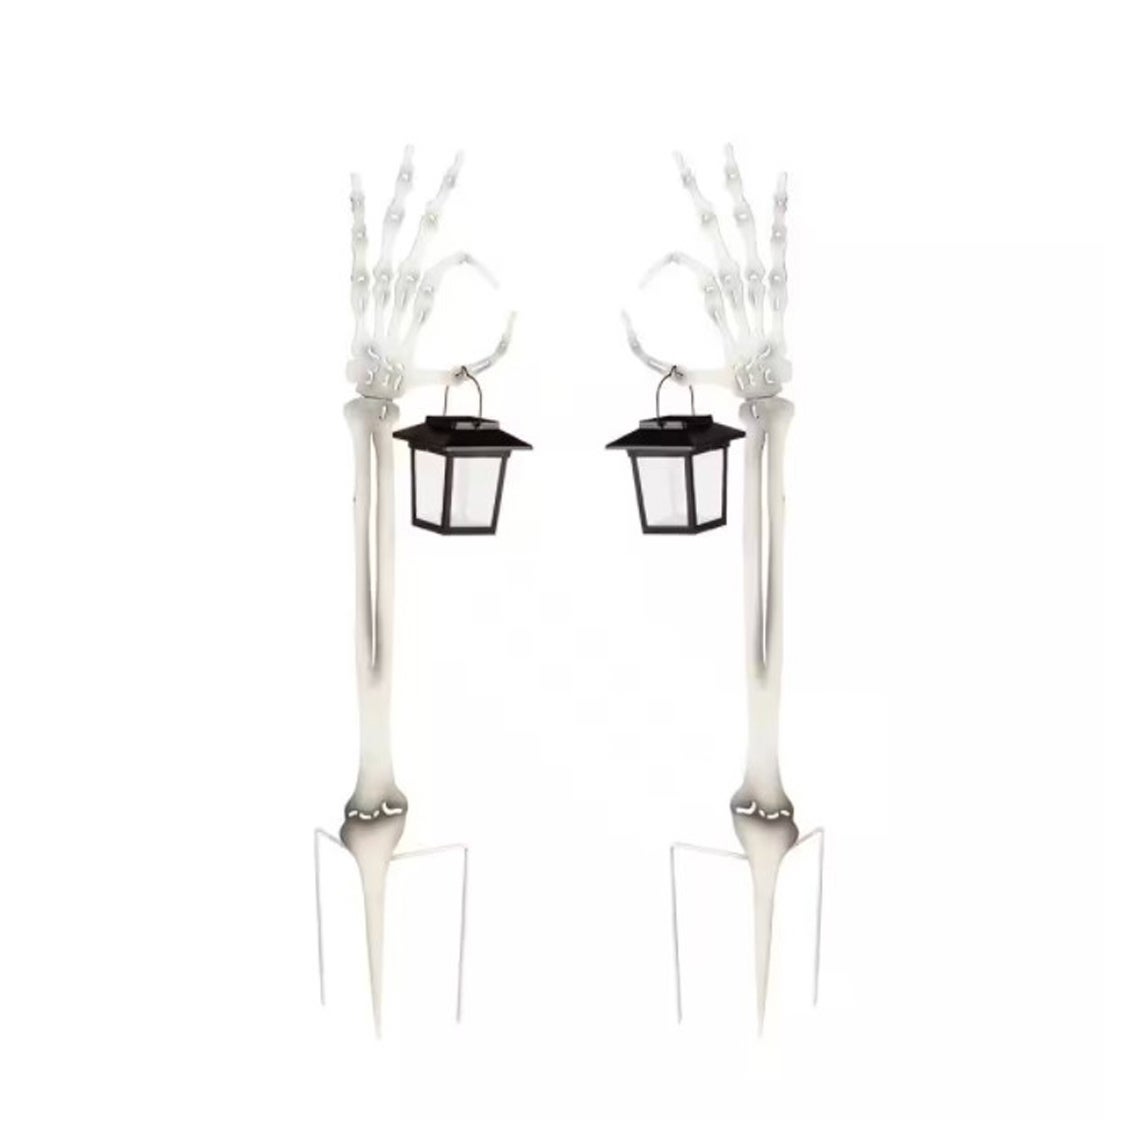 29"H Skeleton Hand Garden Stake with Solar Flickering Light Lantern, Set of 2